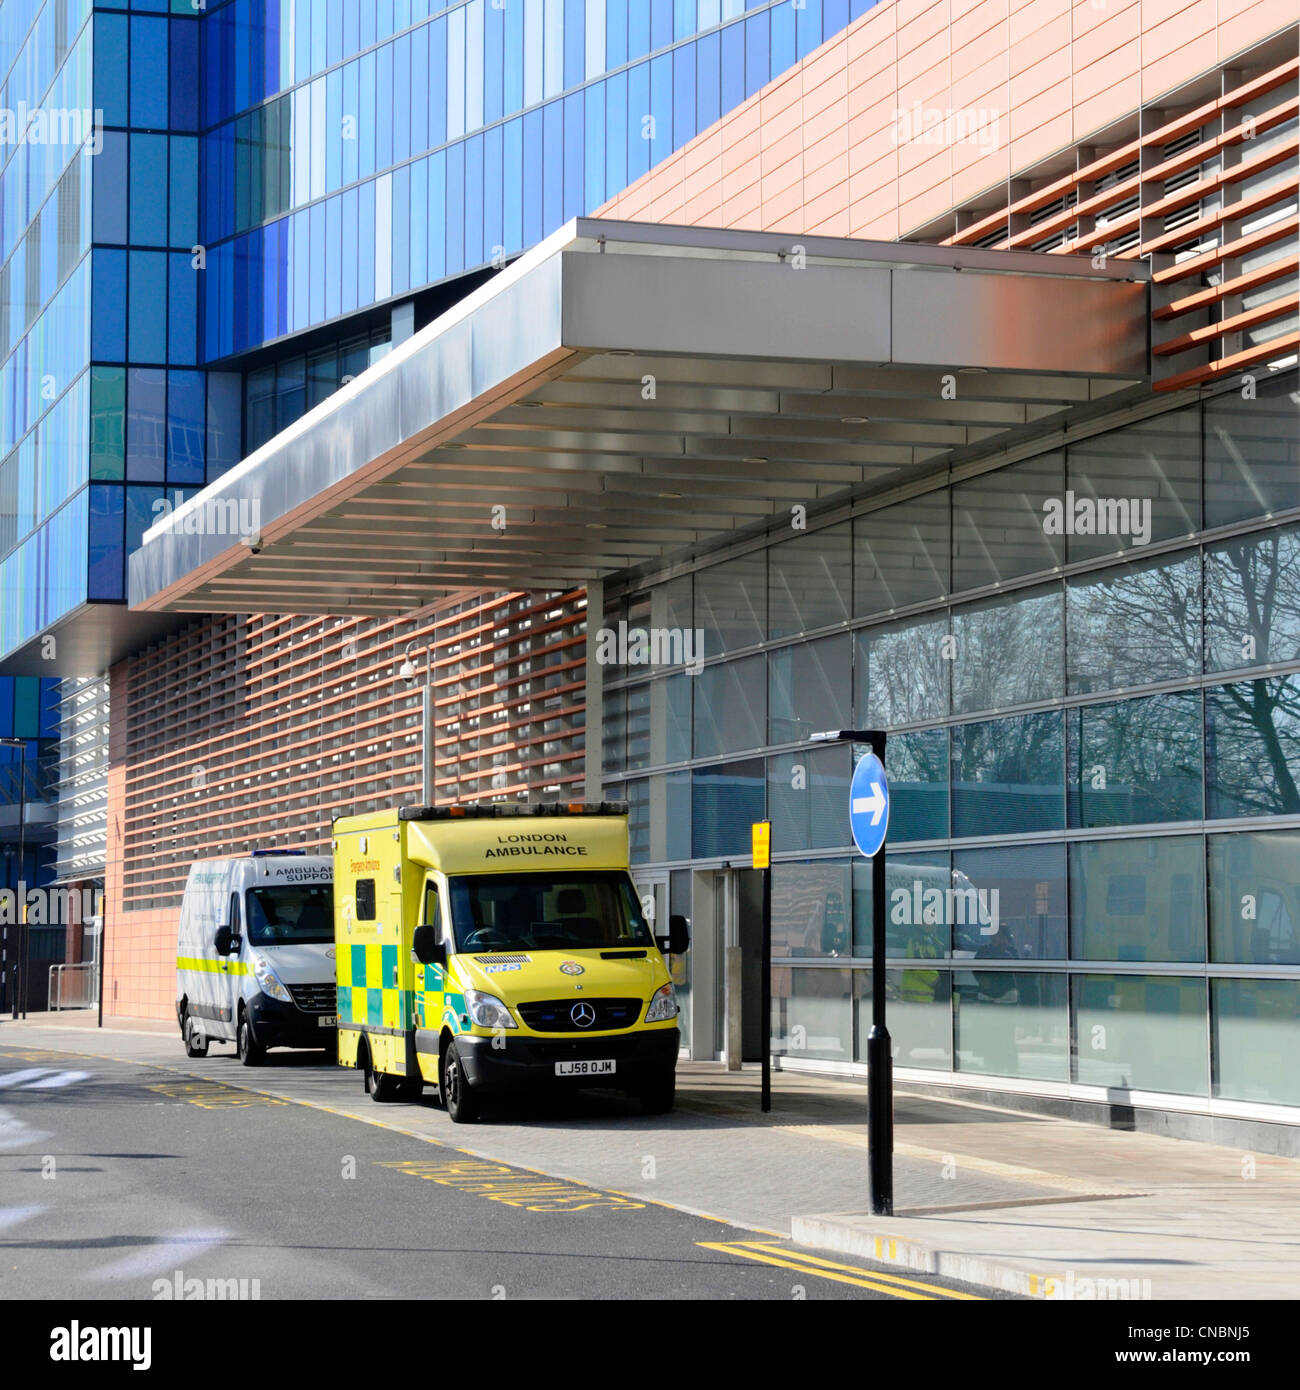 Ambulance outside exterior of A&E department in modern NHS healthcare hospital building Royal London Hospital Whitechapel Tower Hamlets East London UK Stock Photo